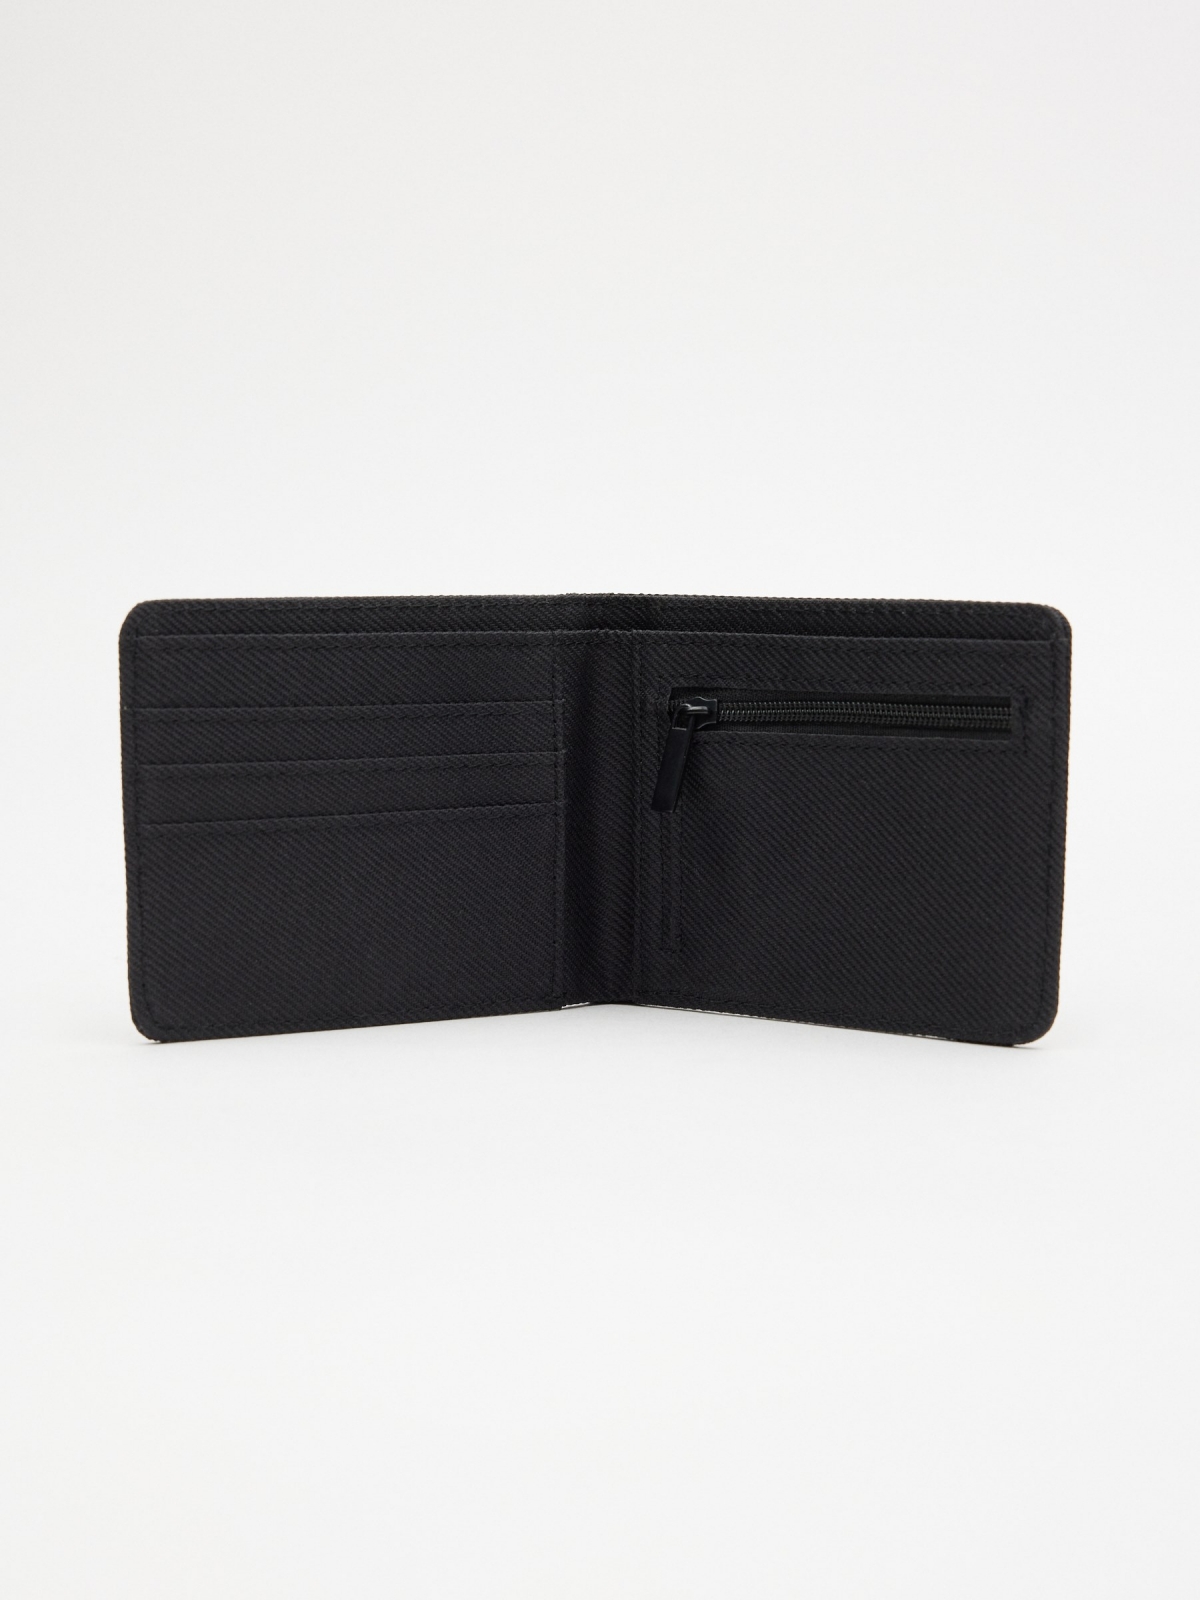 Men's wallet INSIDE application black 45º side view